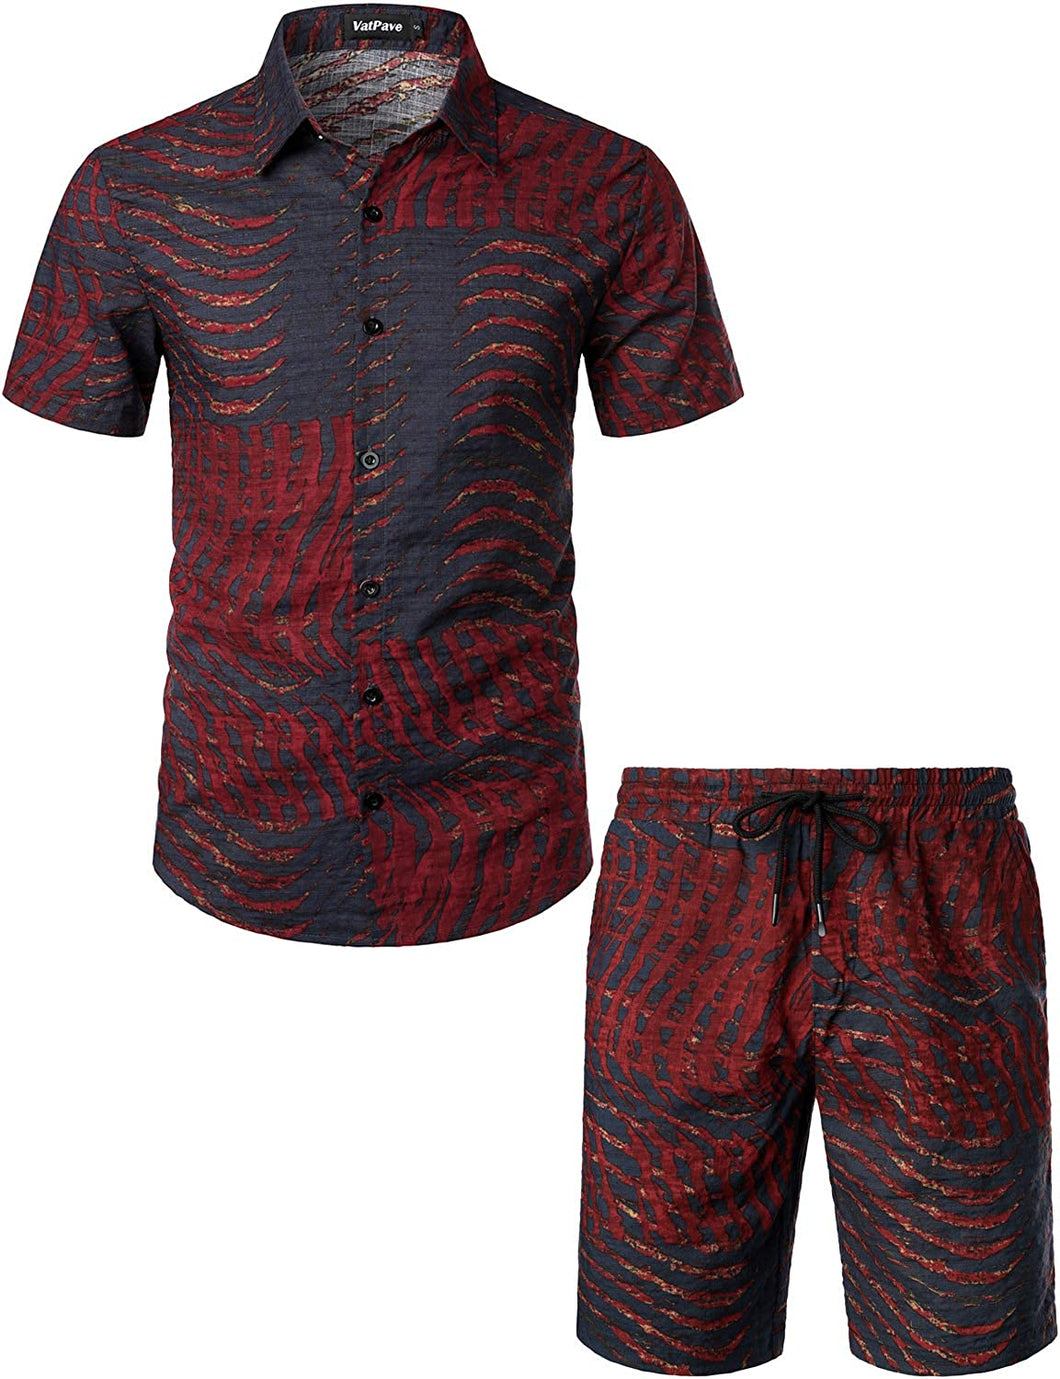 Men's Maroon Printed Short Sleeve Shirt & Shorts Set